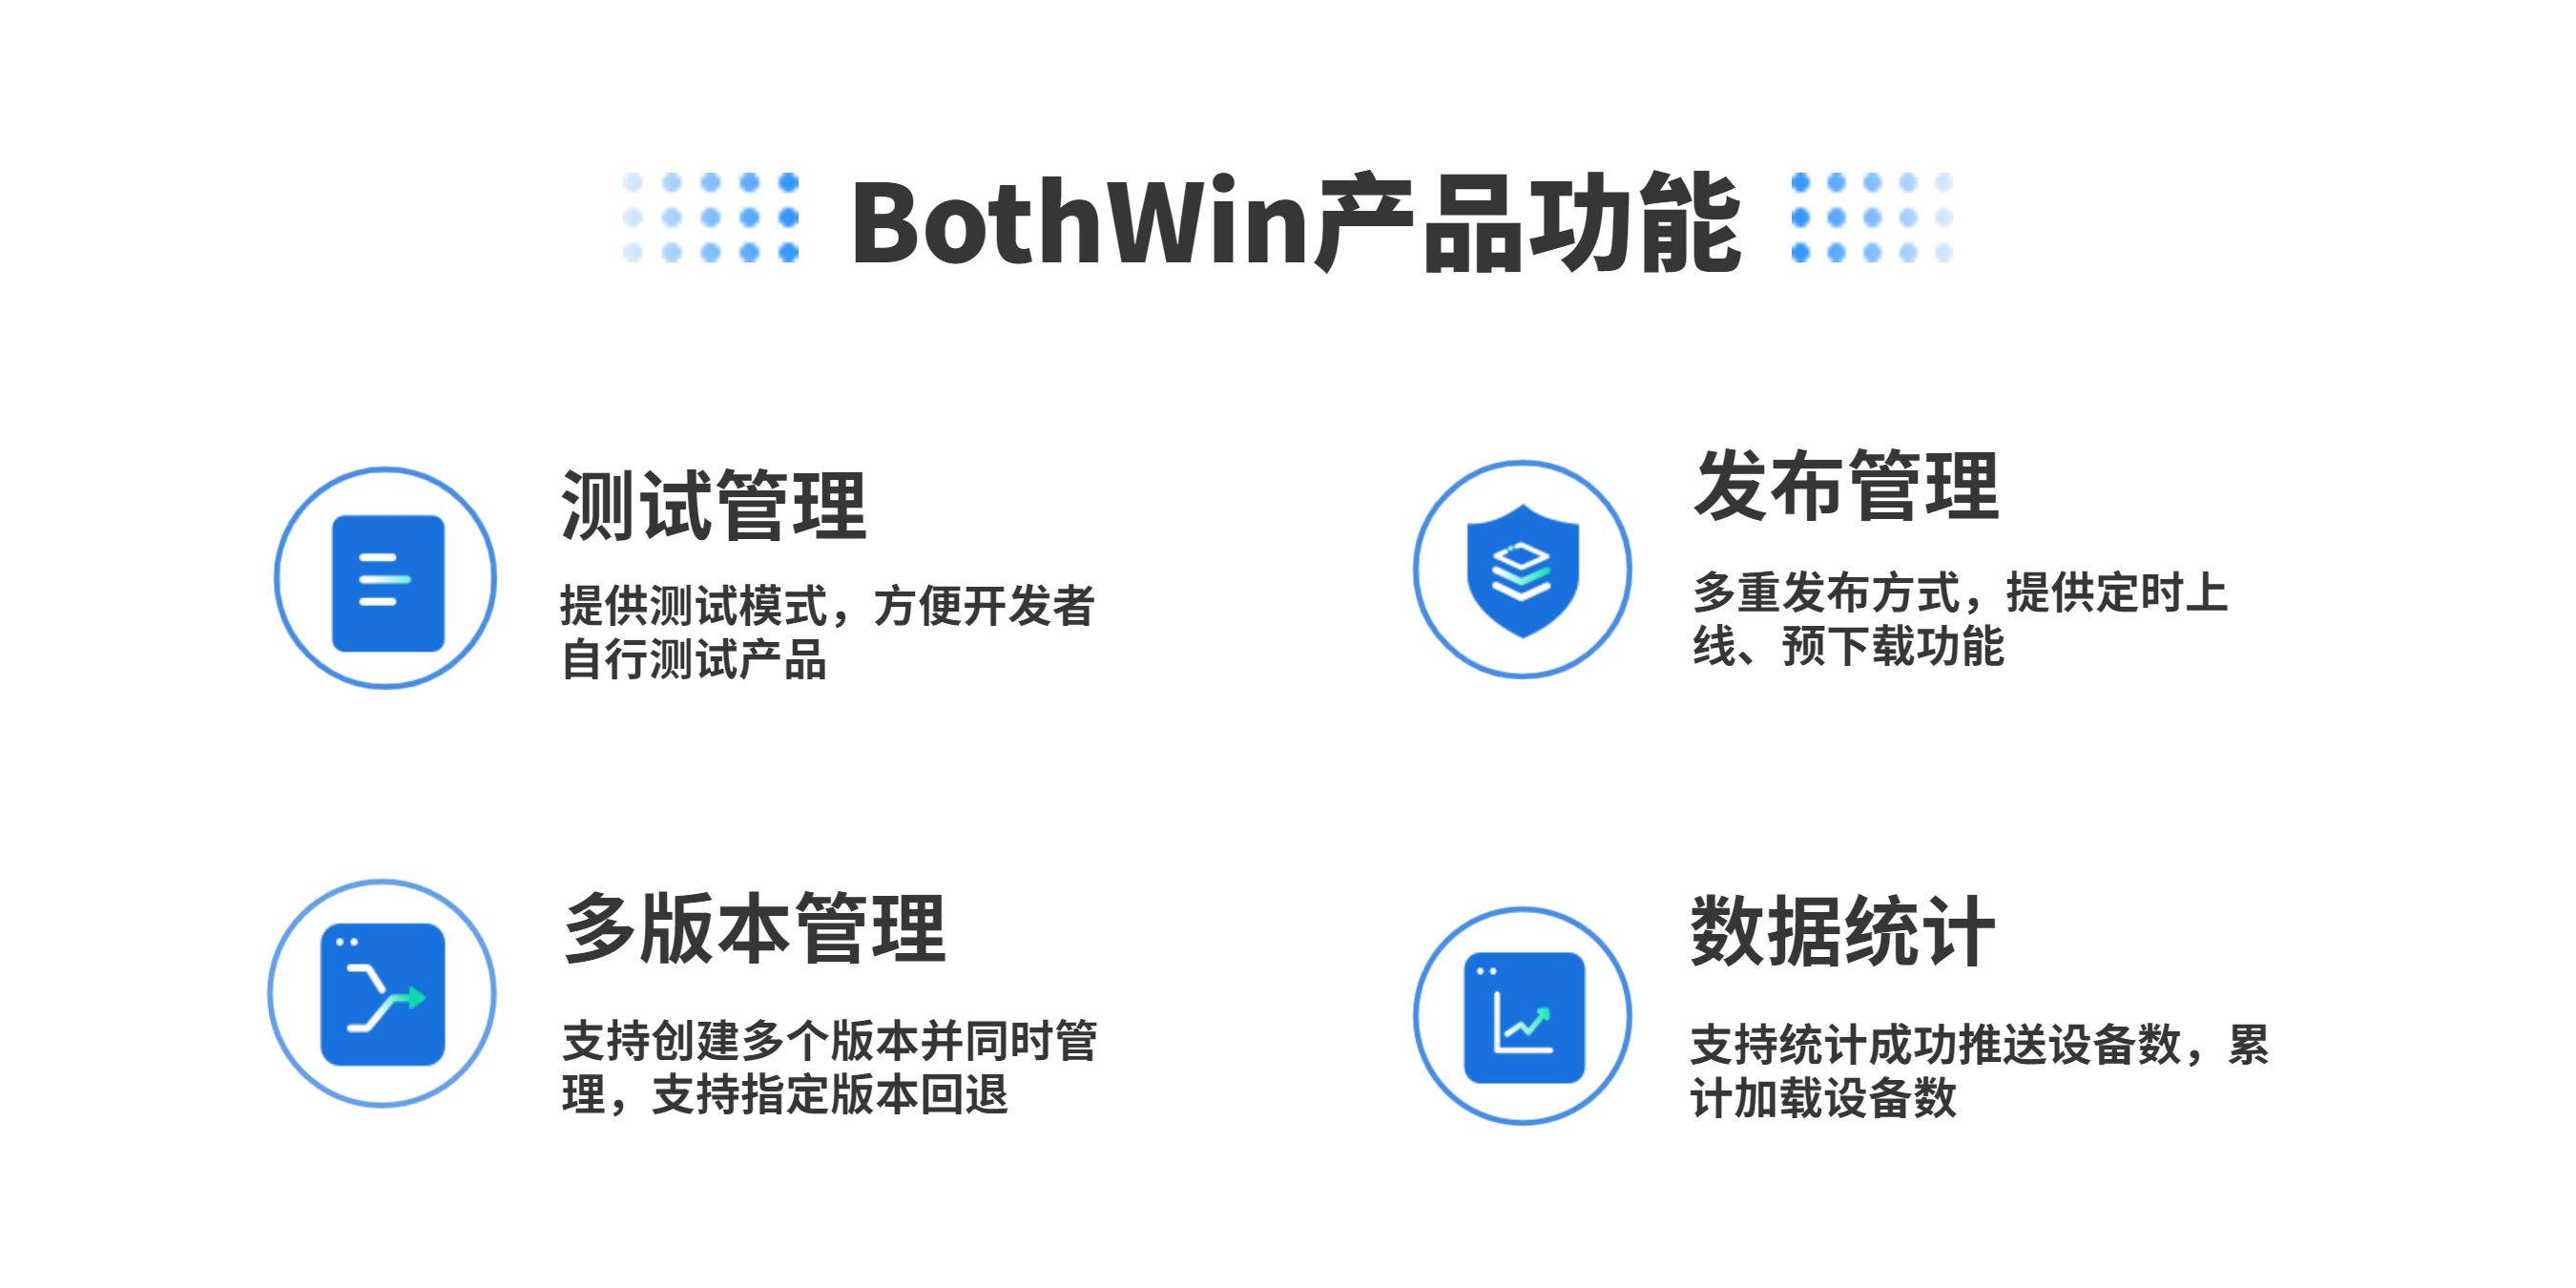 BothWin,分包与热更新服务,手游与移动应用,精细化运营